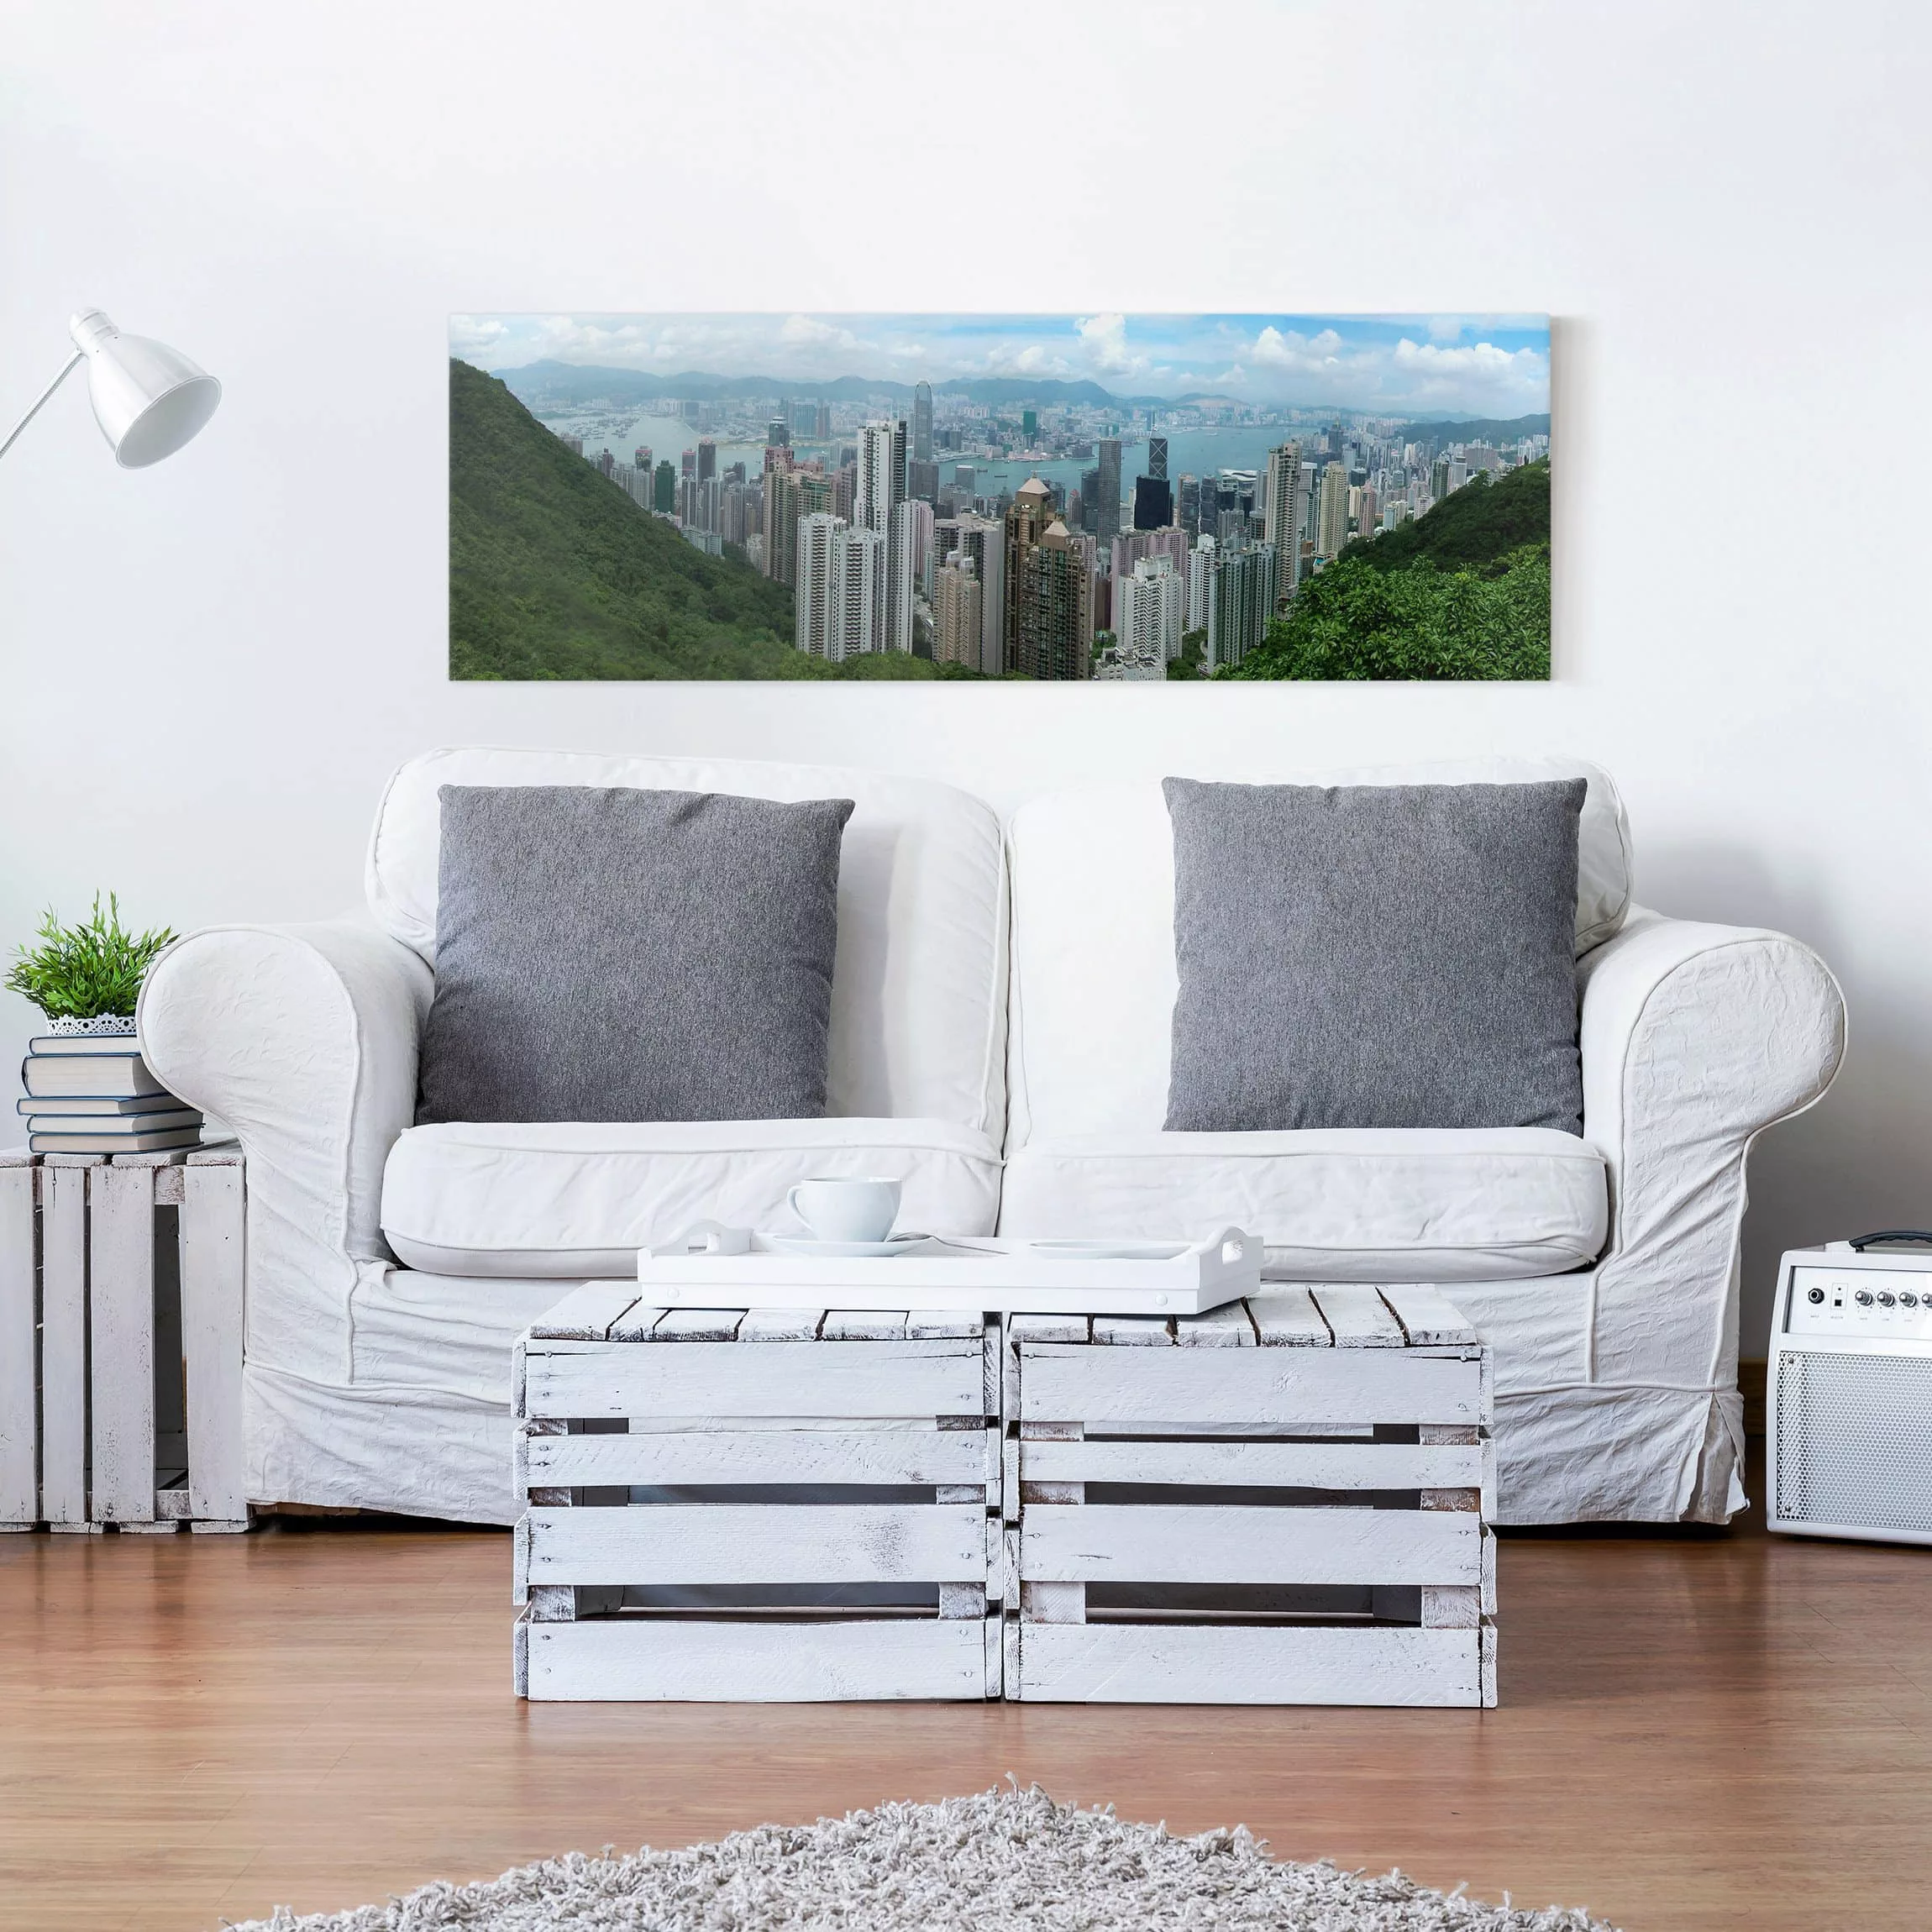 Leinwandbild Architektur & Skyline - Panorama Watching HongKong günstig online kaufen